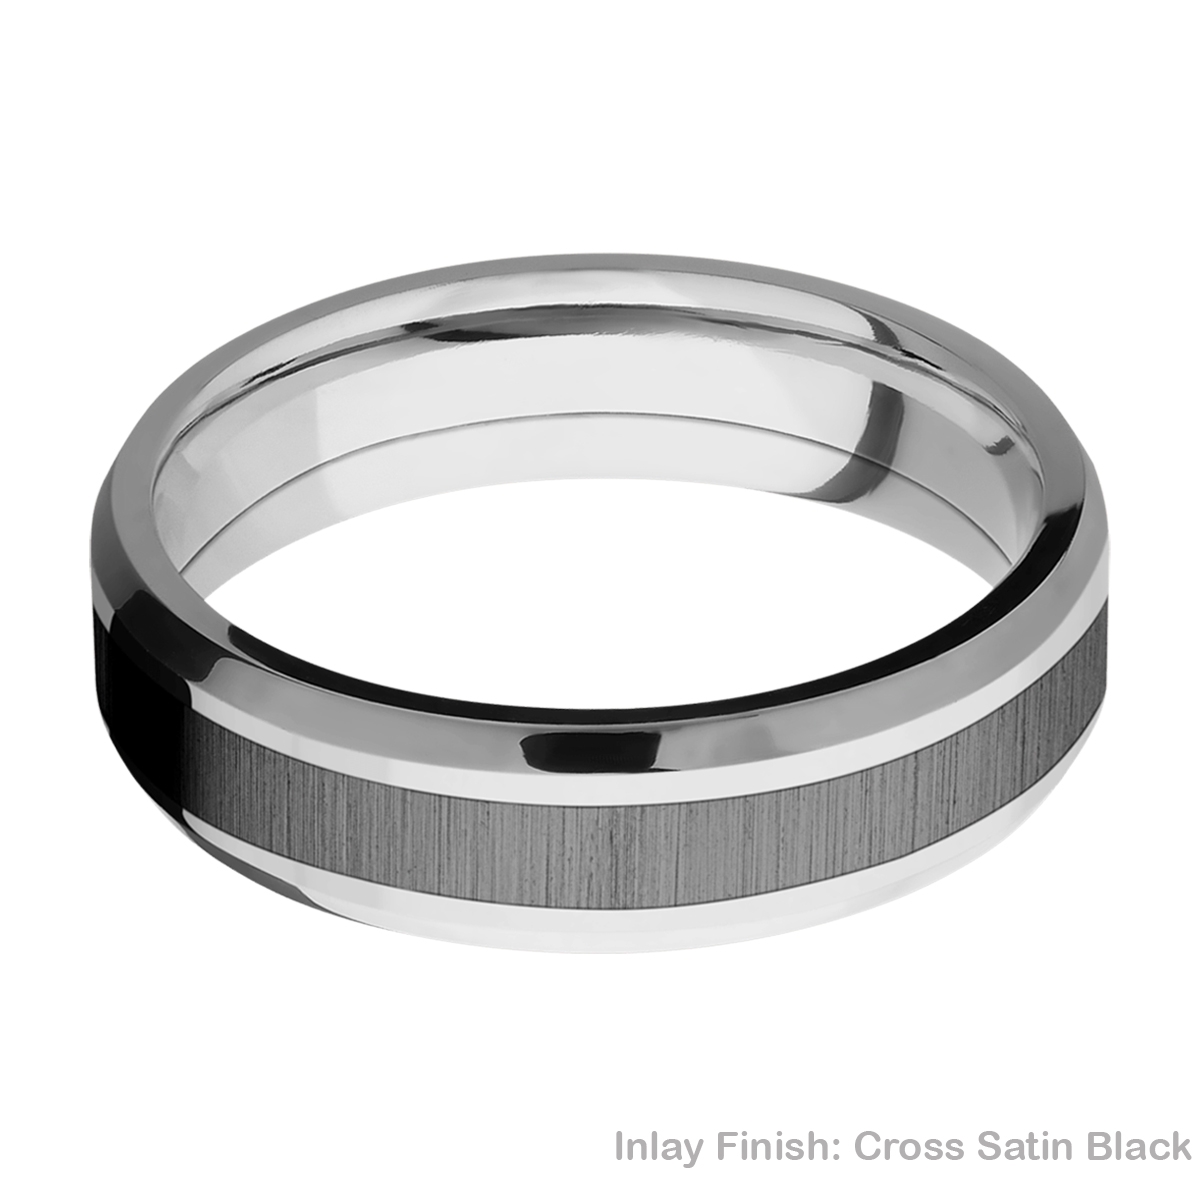 Lashbrook CCPF6B13(NS)/ZIRCONIUM Cobalt Chrome Wedding Ring or Band